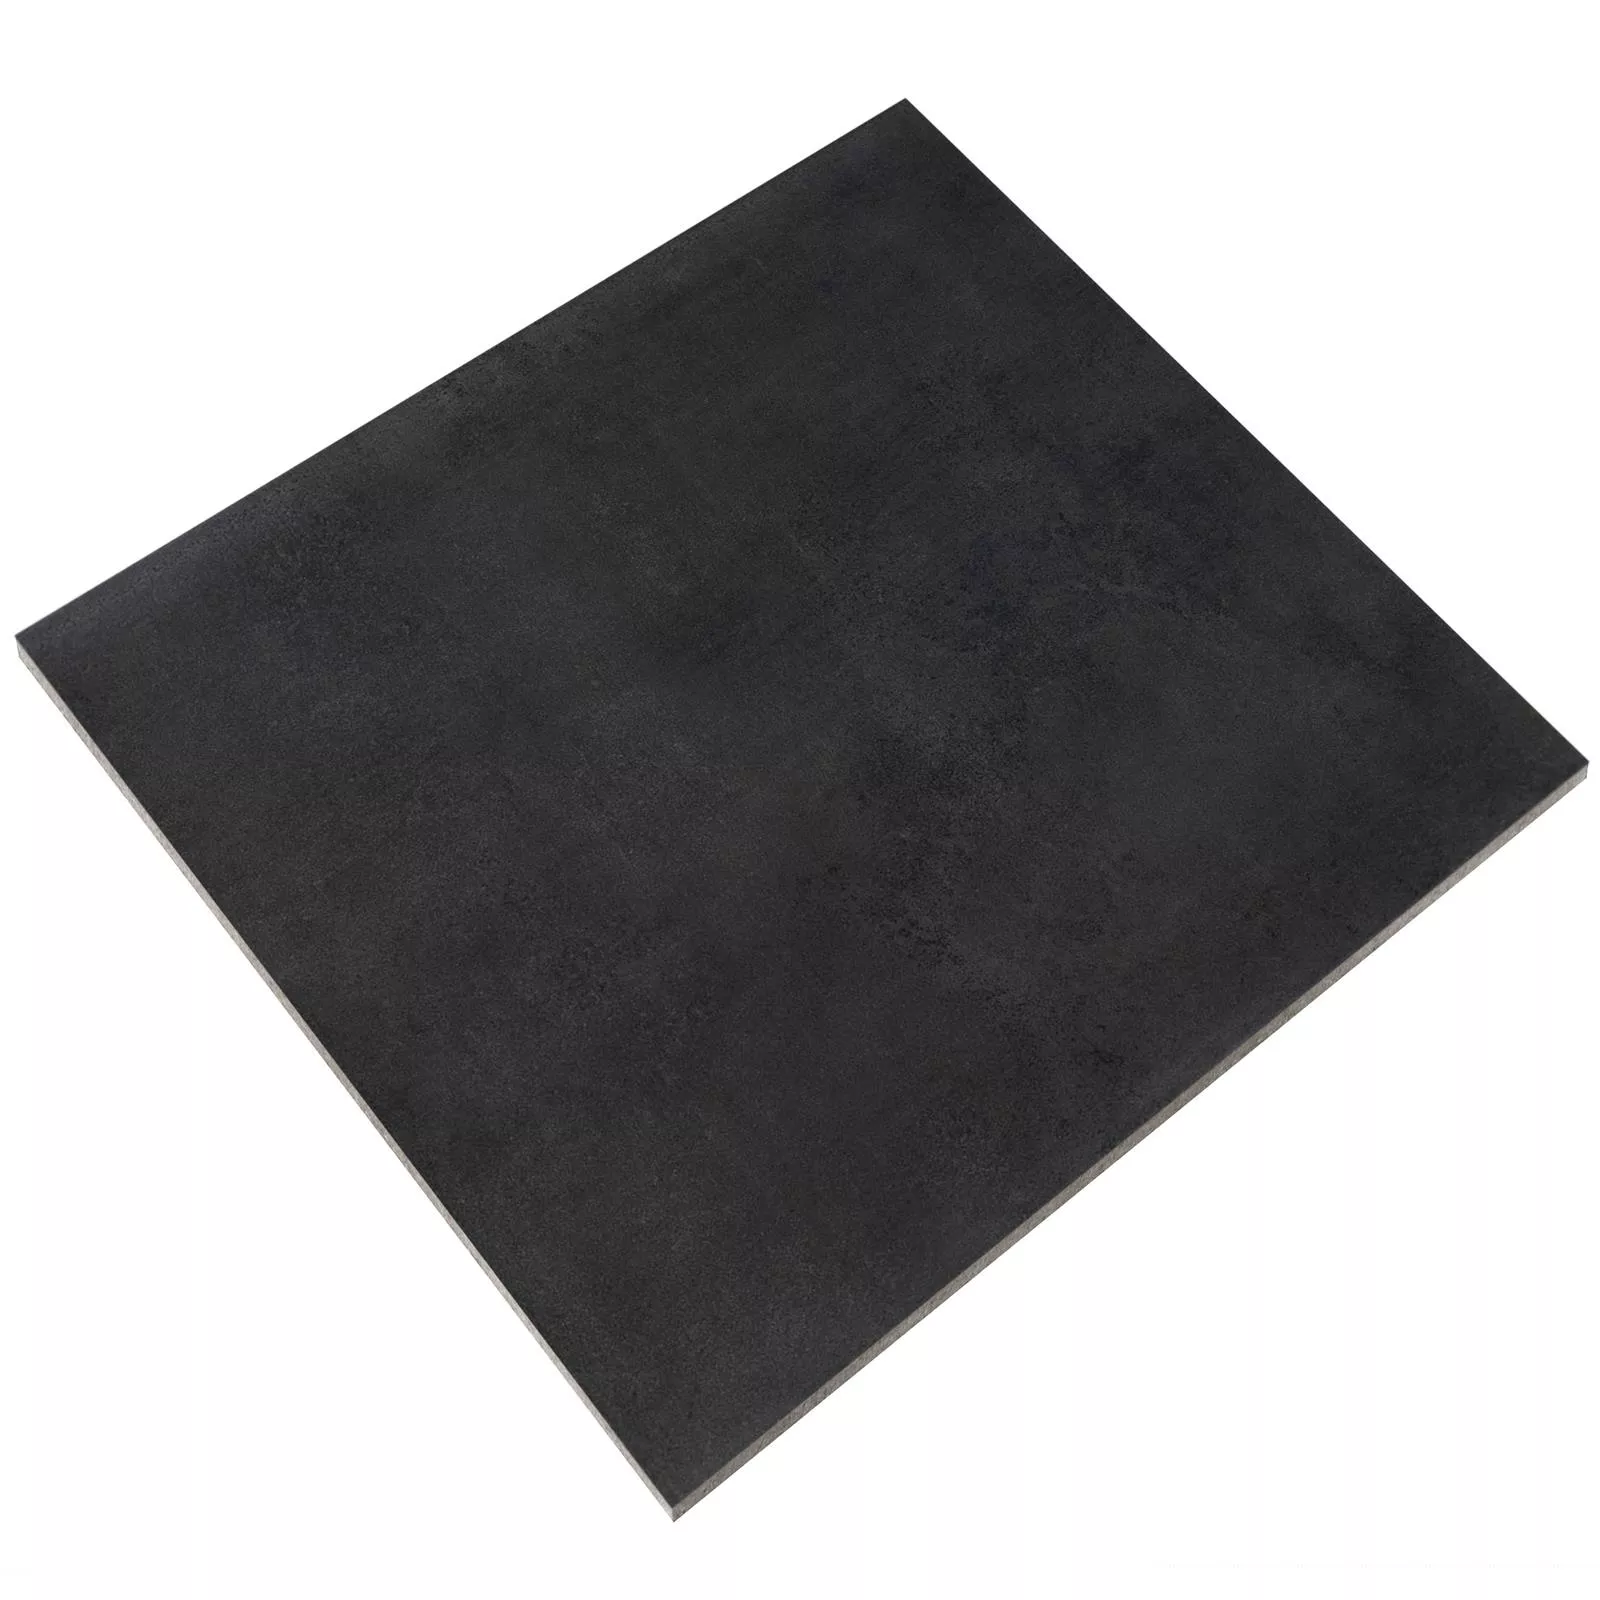 Sample Floor Tiles Mainland Beton Optic Polished 60x60cm Black